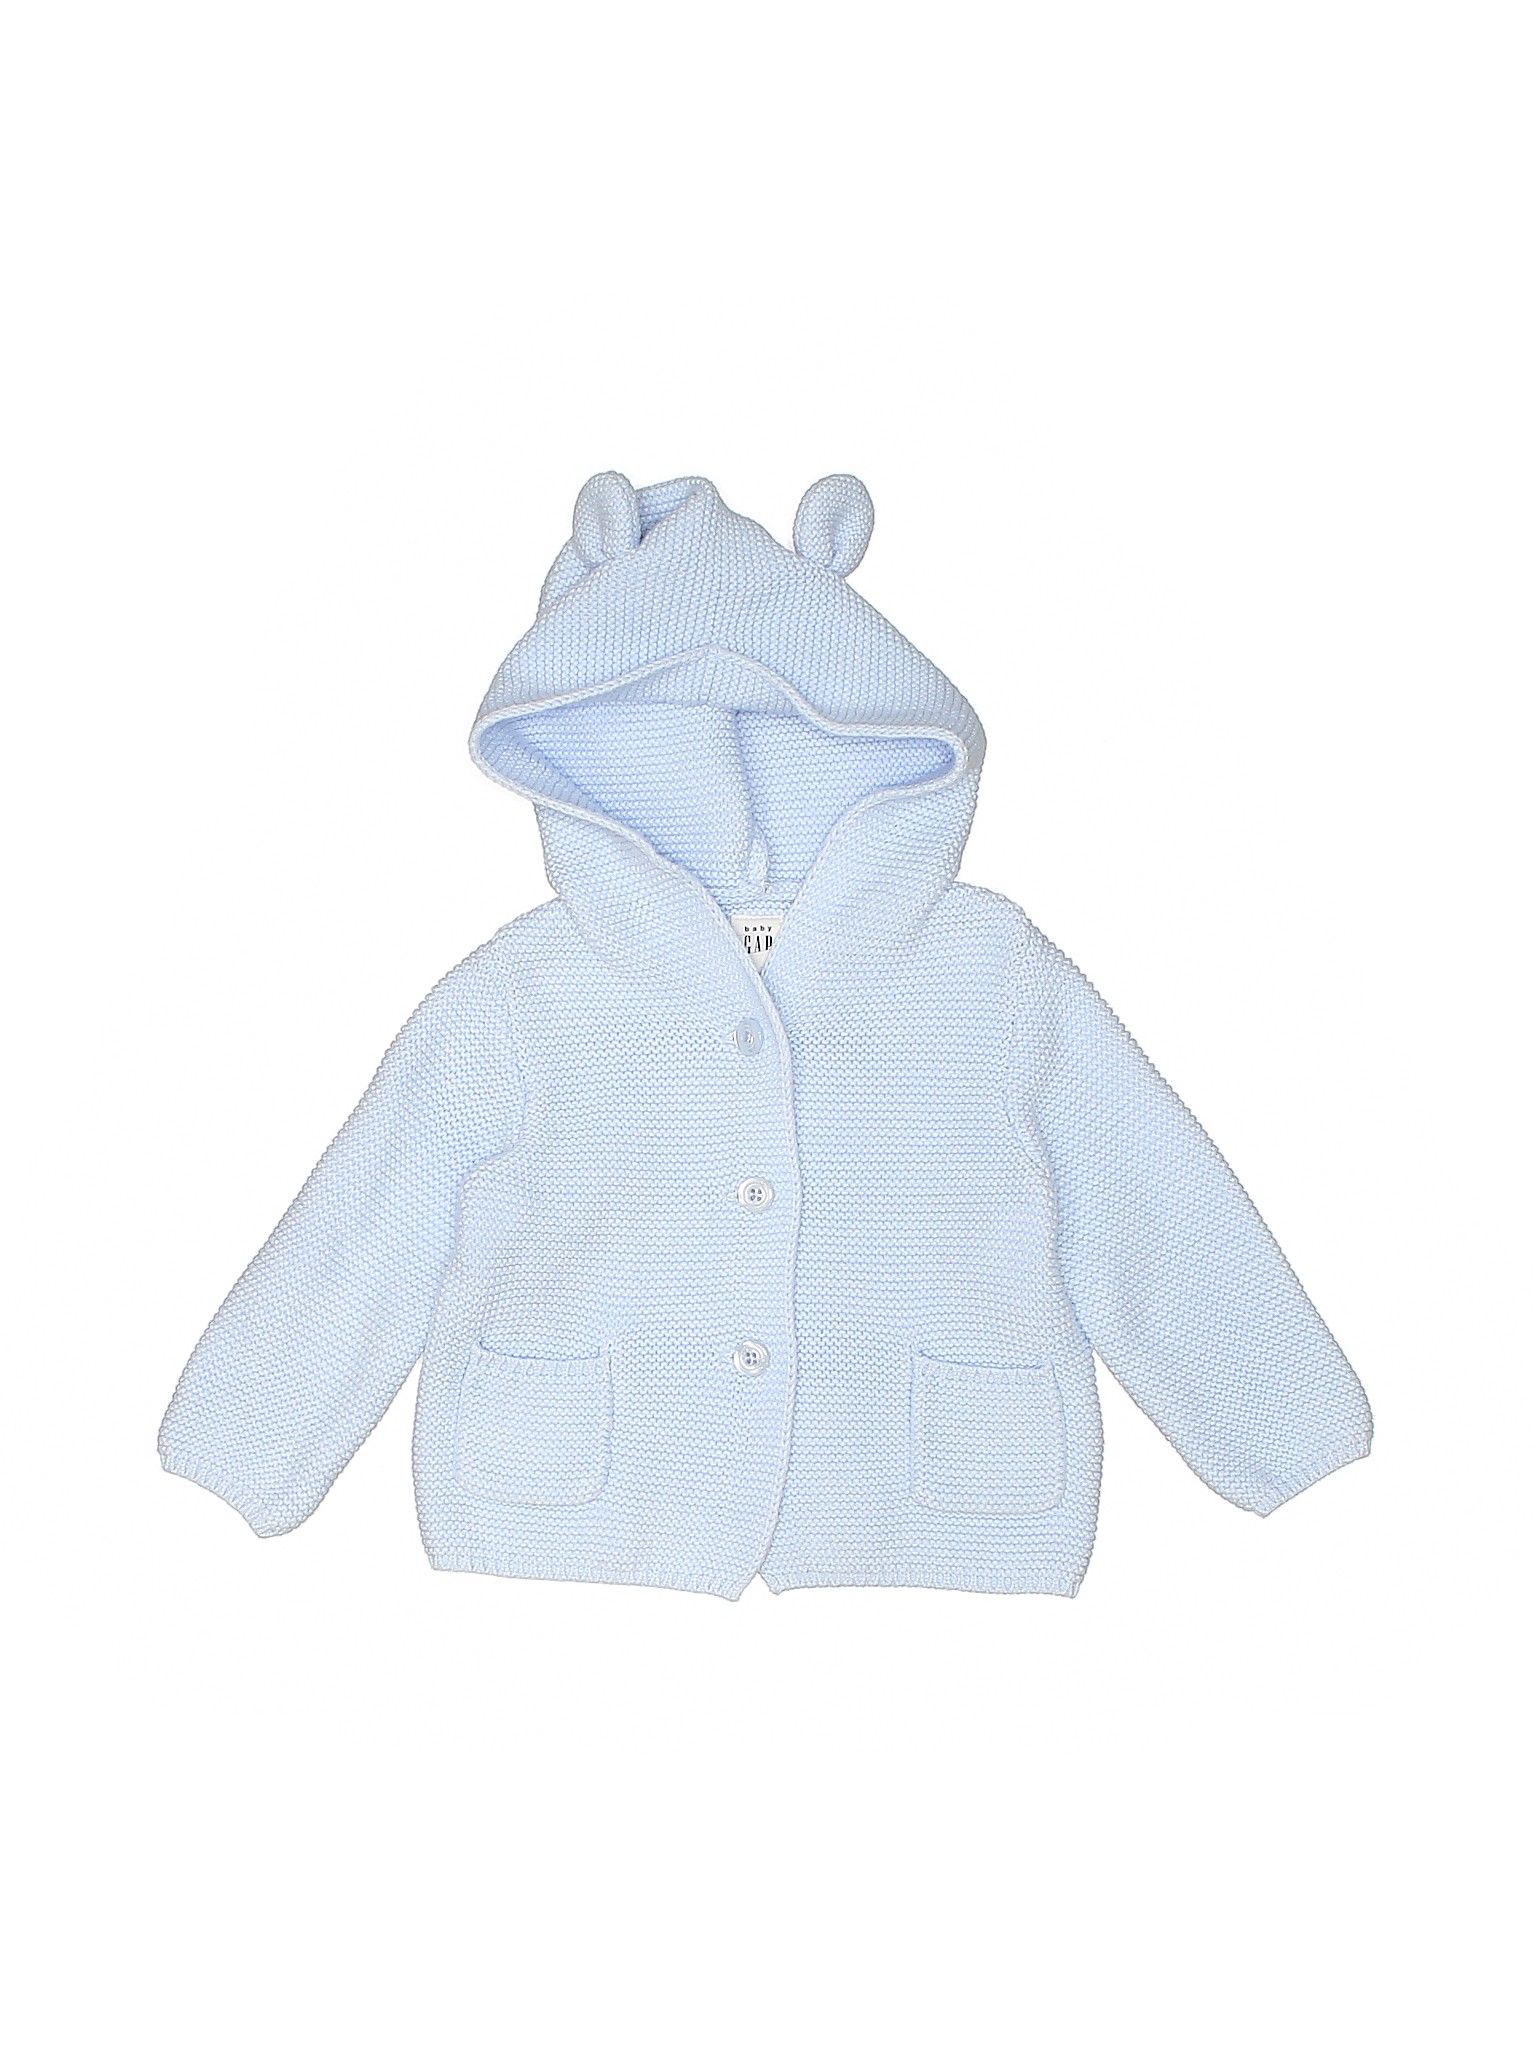 Baby Gap Cardigan Size 6 mo: Blue Boys Tops - 43551910 | thredUP